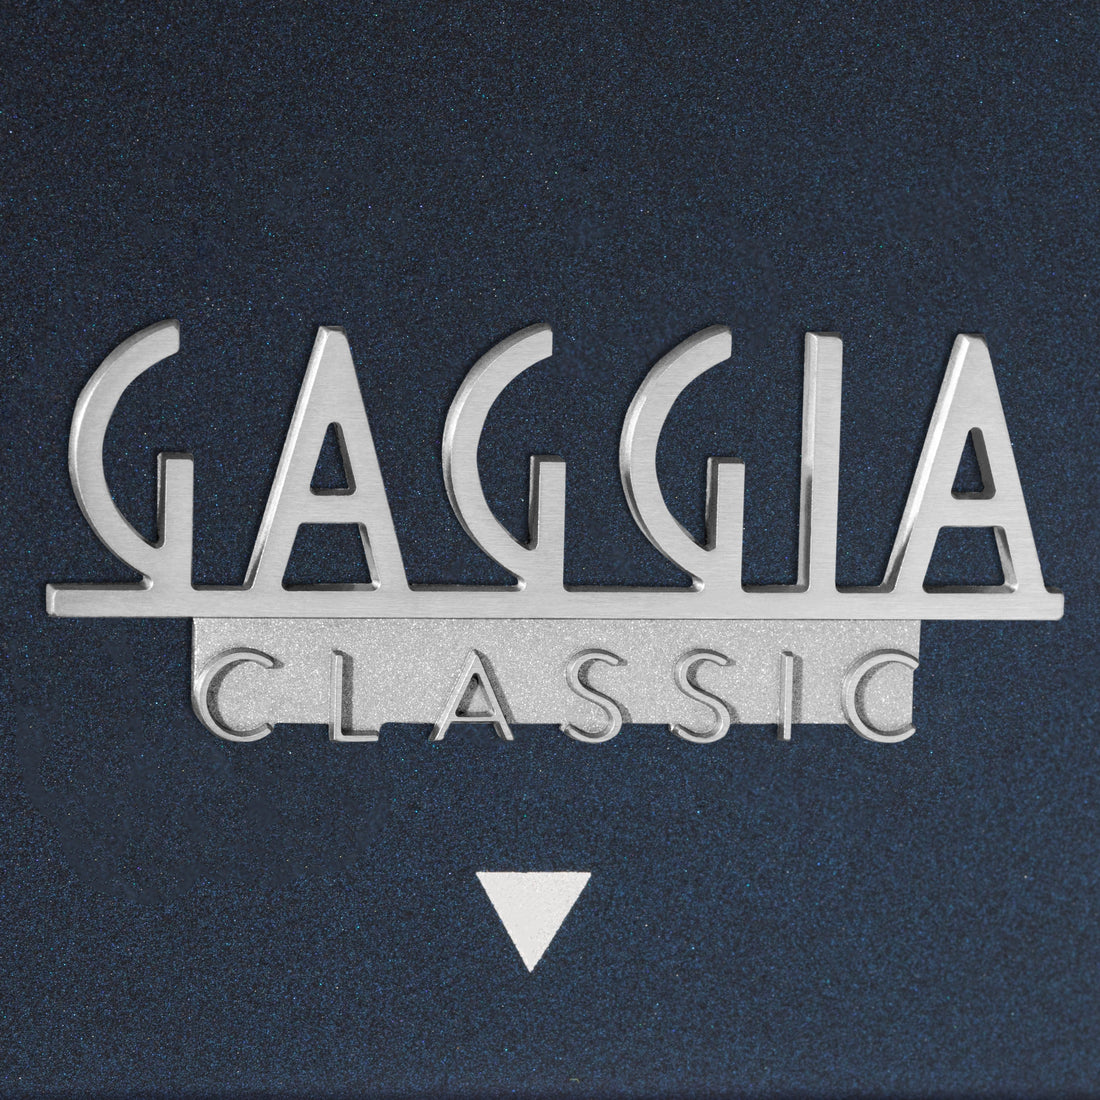 Gaggia Classic Evo Pro Espresso Machine in Classic Blue with Blackened Oak